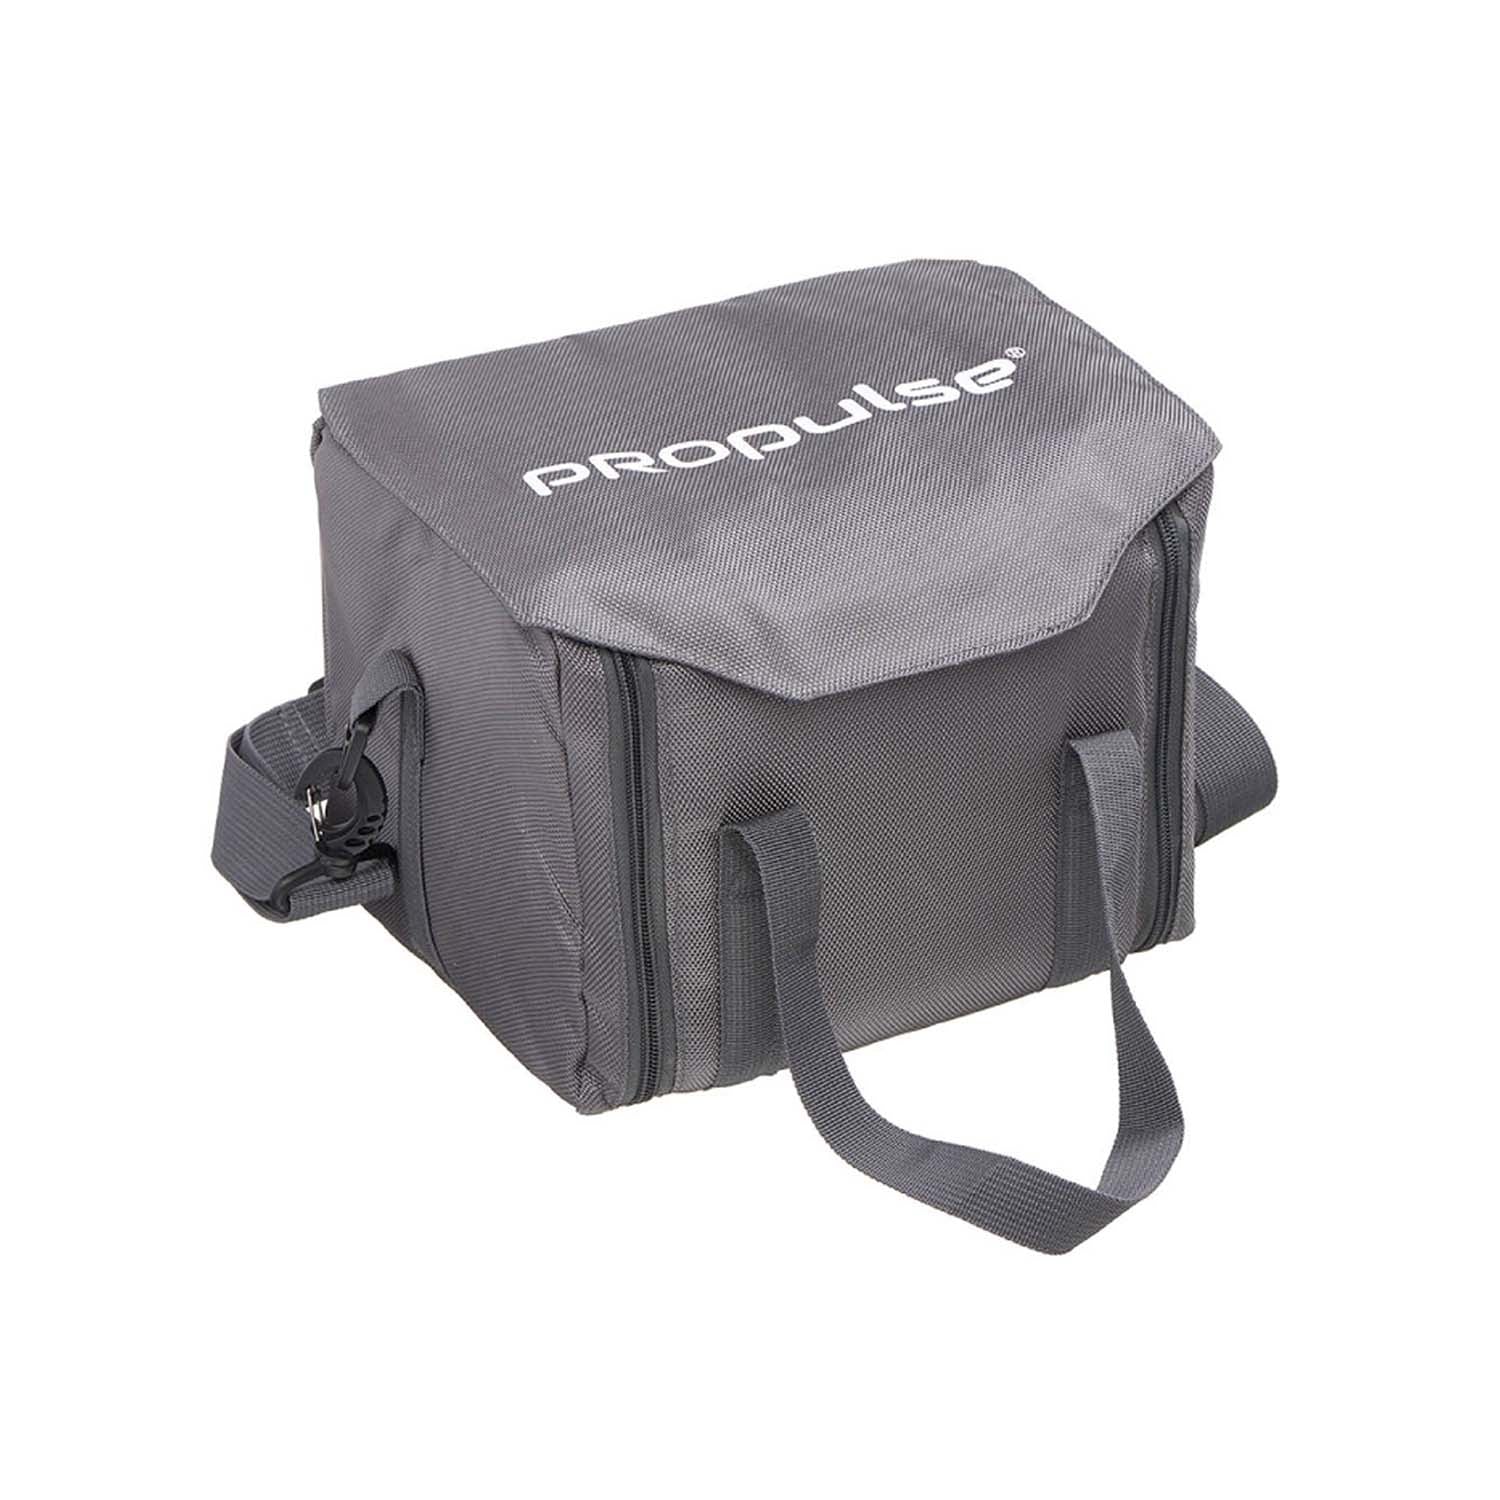 Propulse Universal Carry Bag